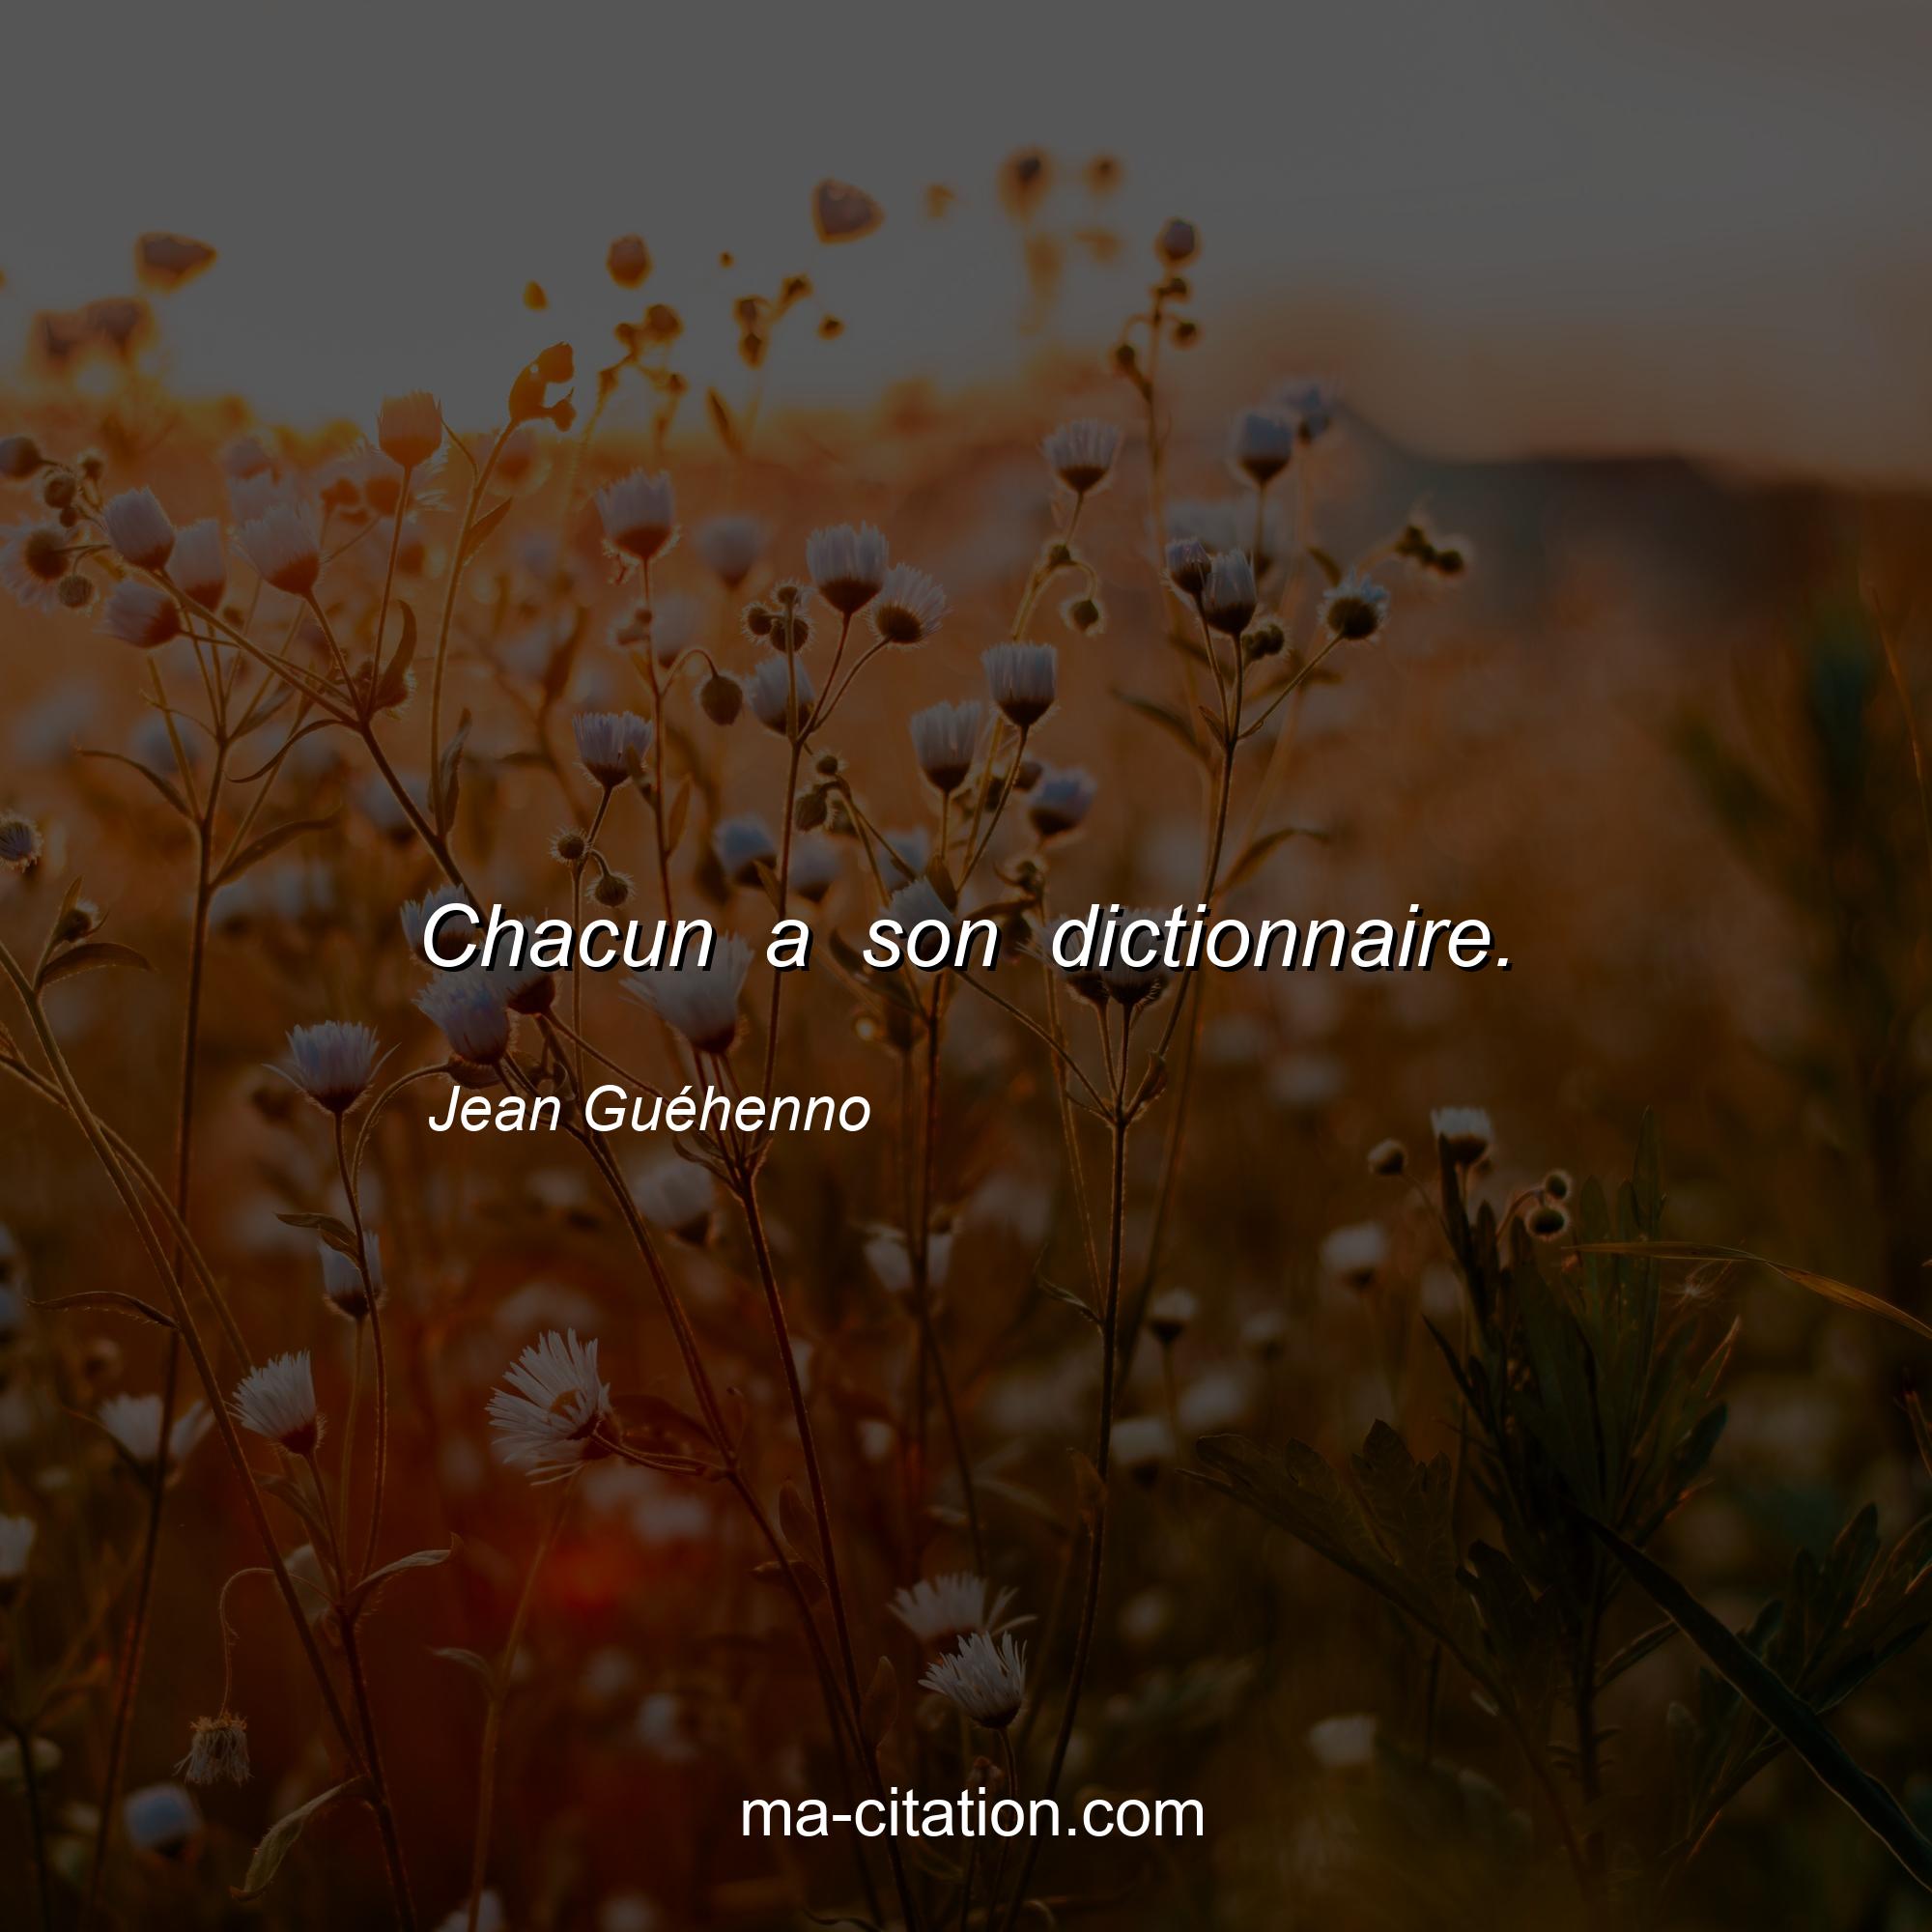 Jean Guéhenno : Chacun a son dictionnaire.